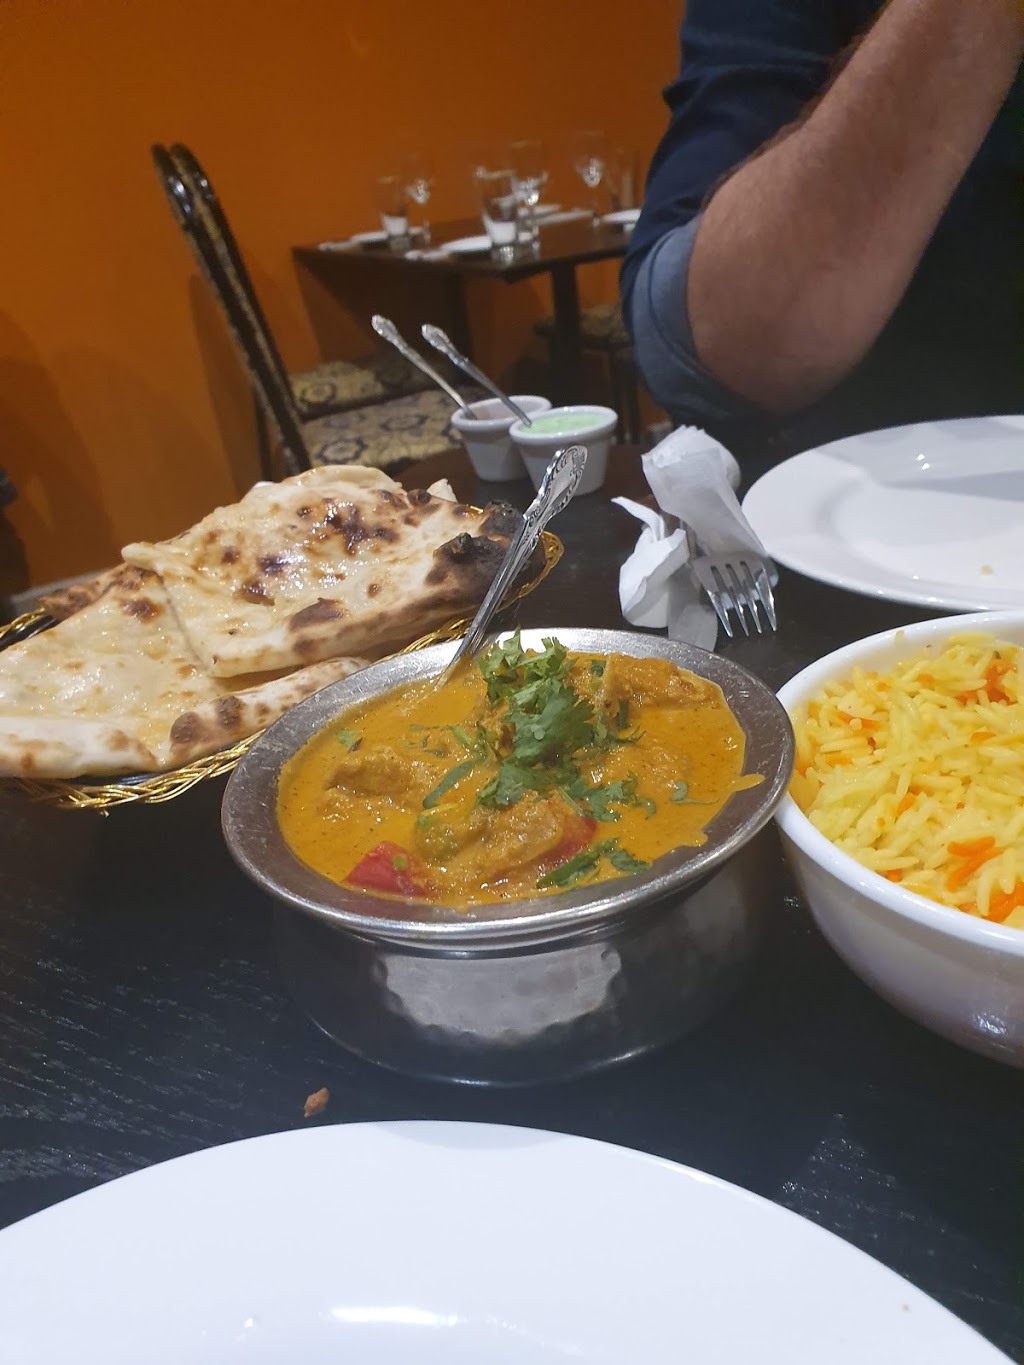 Krishna Indian Restaurant & Take Away | 362 Bay Rd, Cheltenham VIC 3192, Australia | Phone: (03) 9585 4648